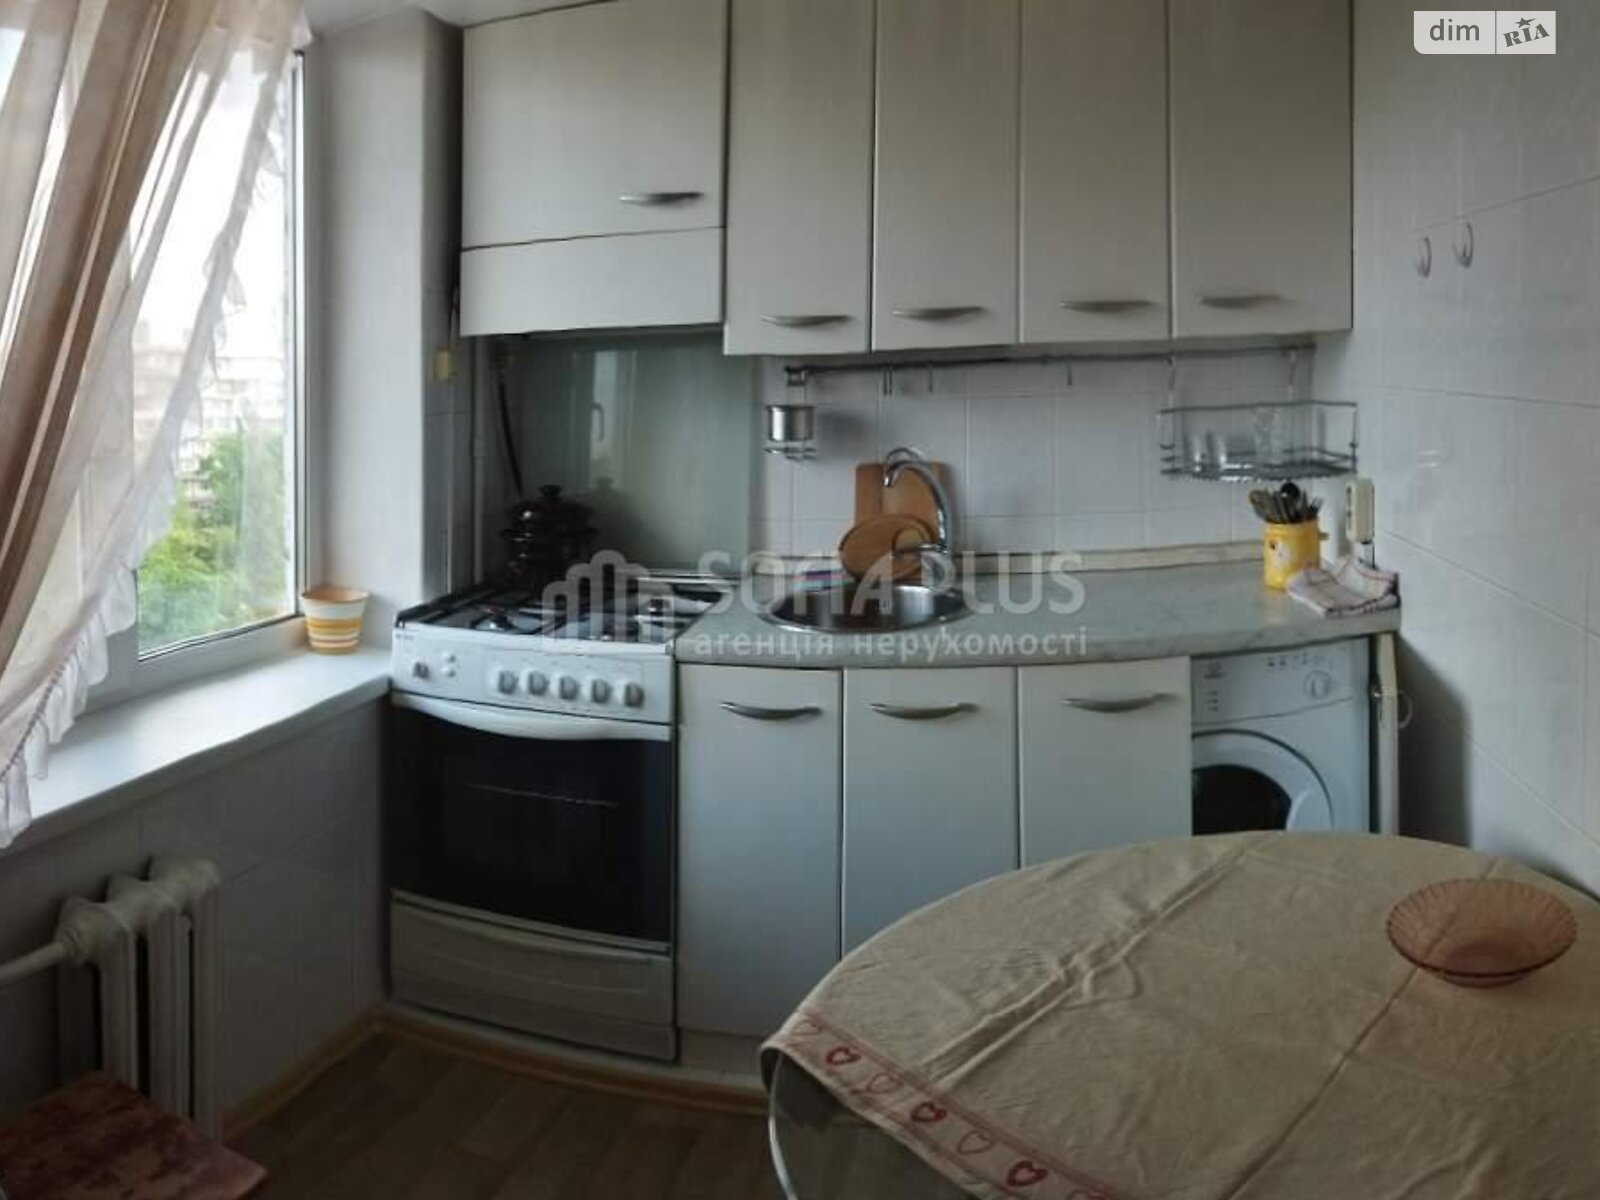 Продажа трехкомнатной квартиры в Киеве, на ул. Ивана Мыколайчука 7, район Березняки фото 1